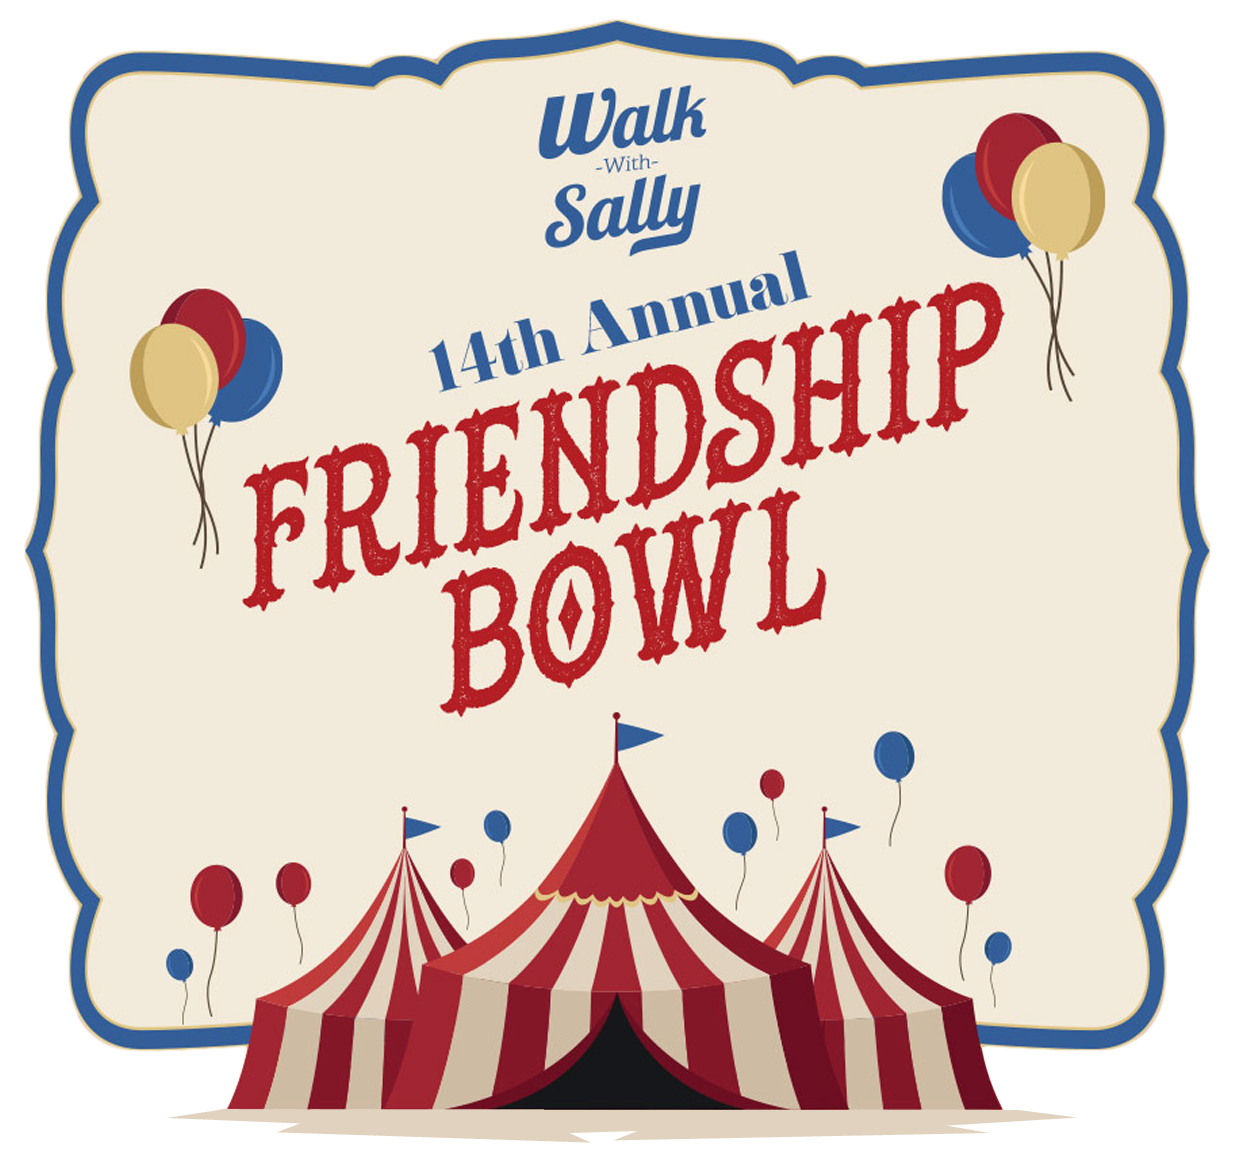 Walk With Sally Friendship Bowl 2021